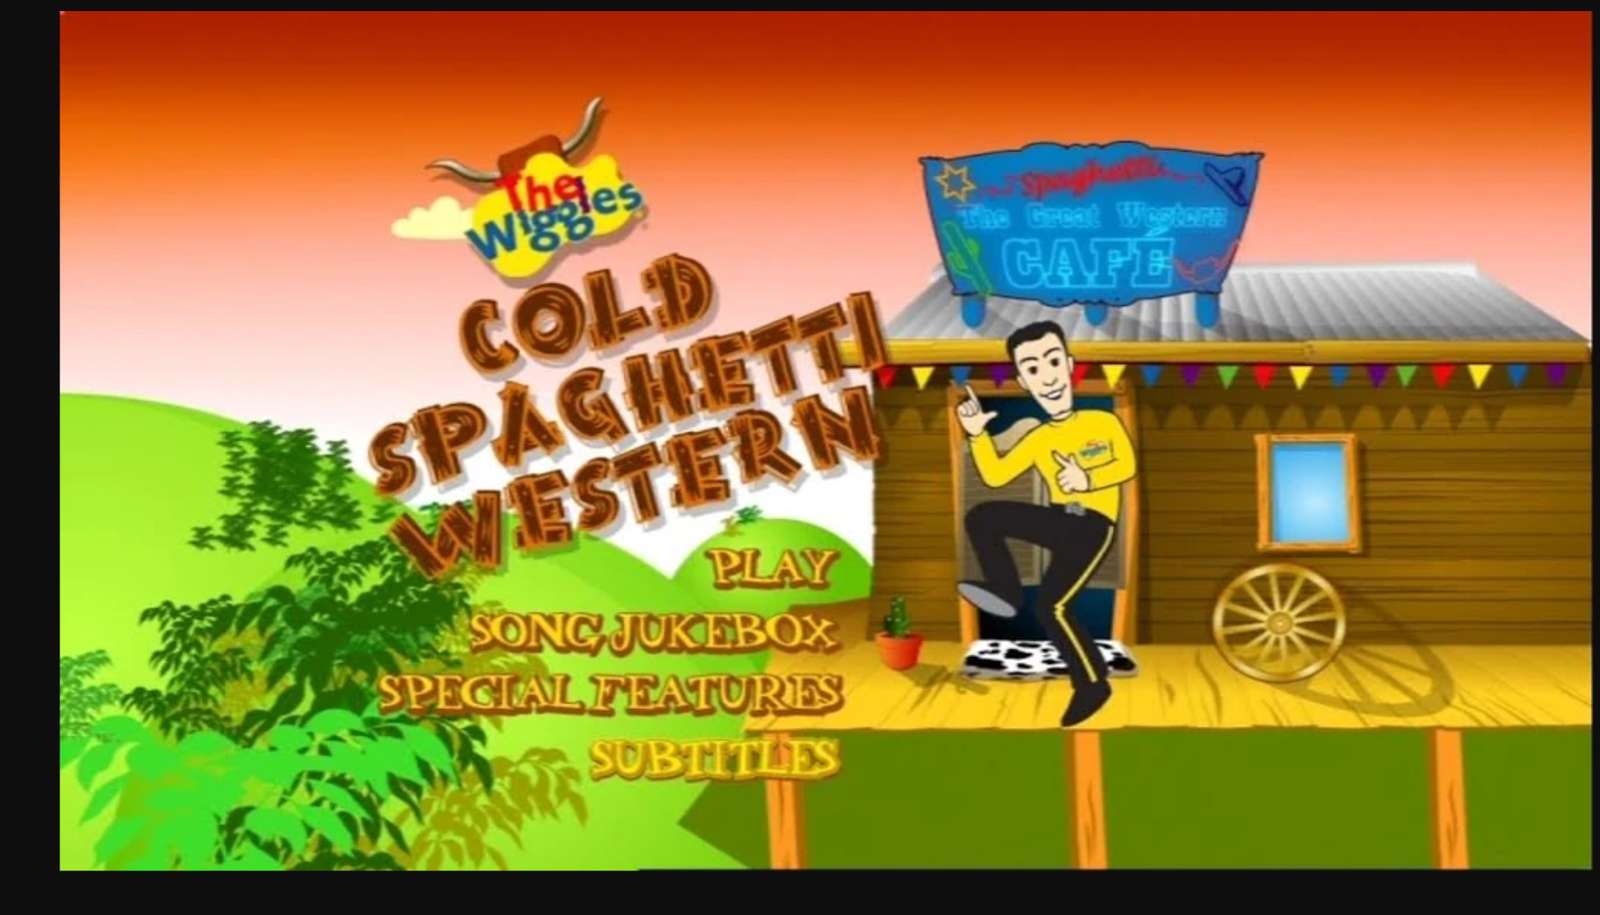 Cold Spaghetti Western dvd-menu Wiggles 2004 online puzzel